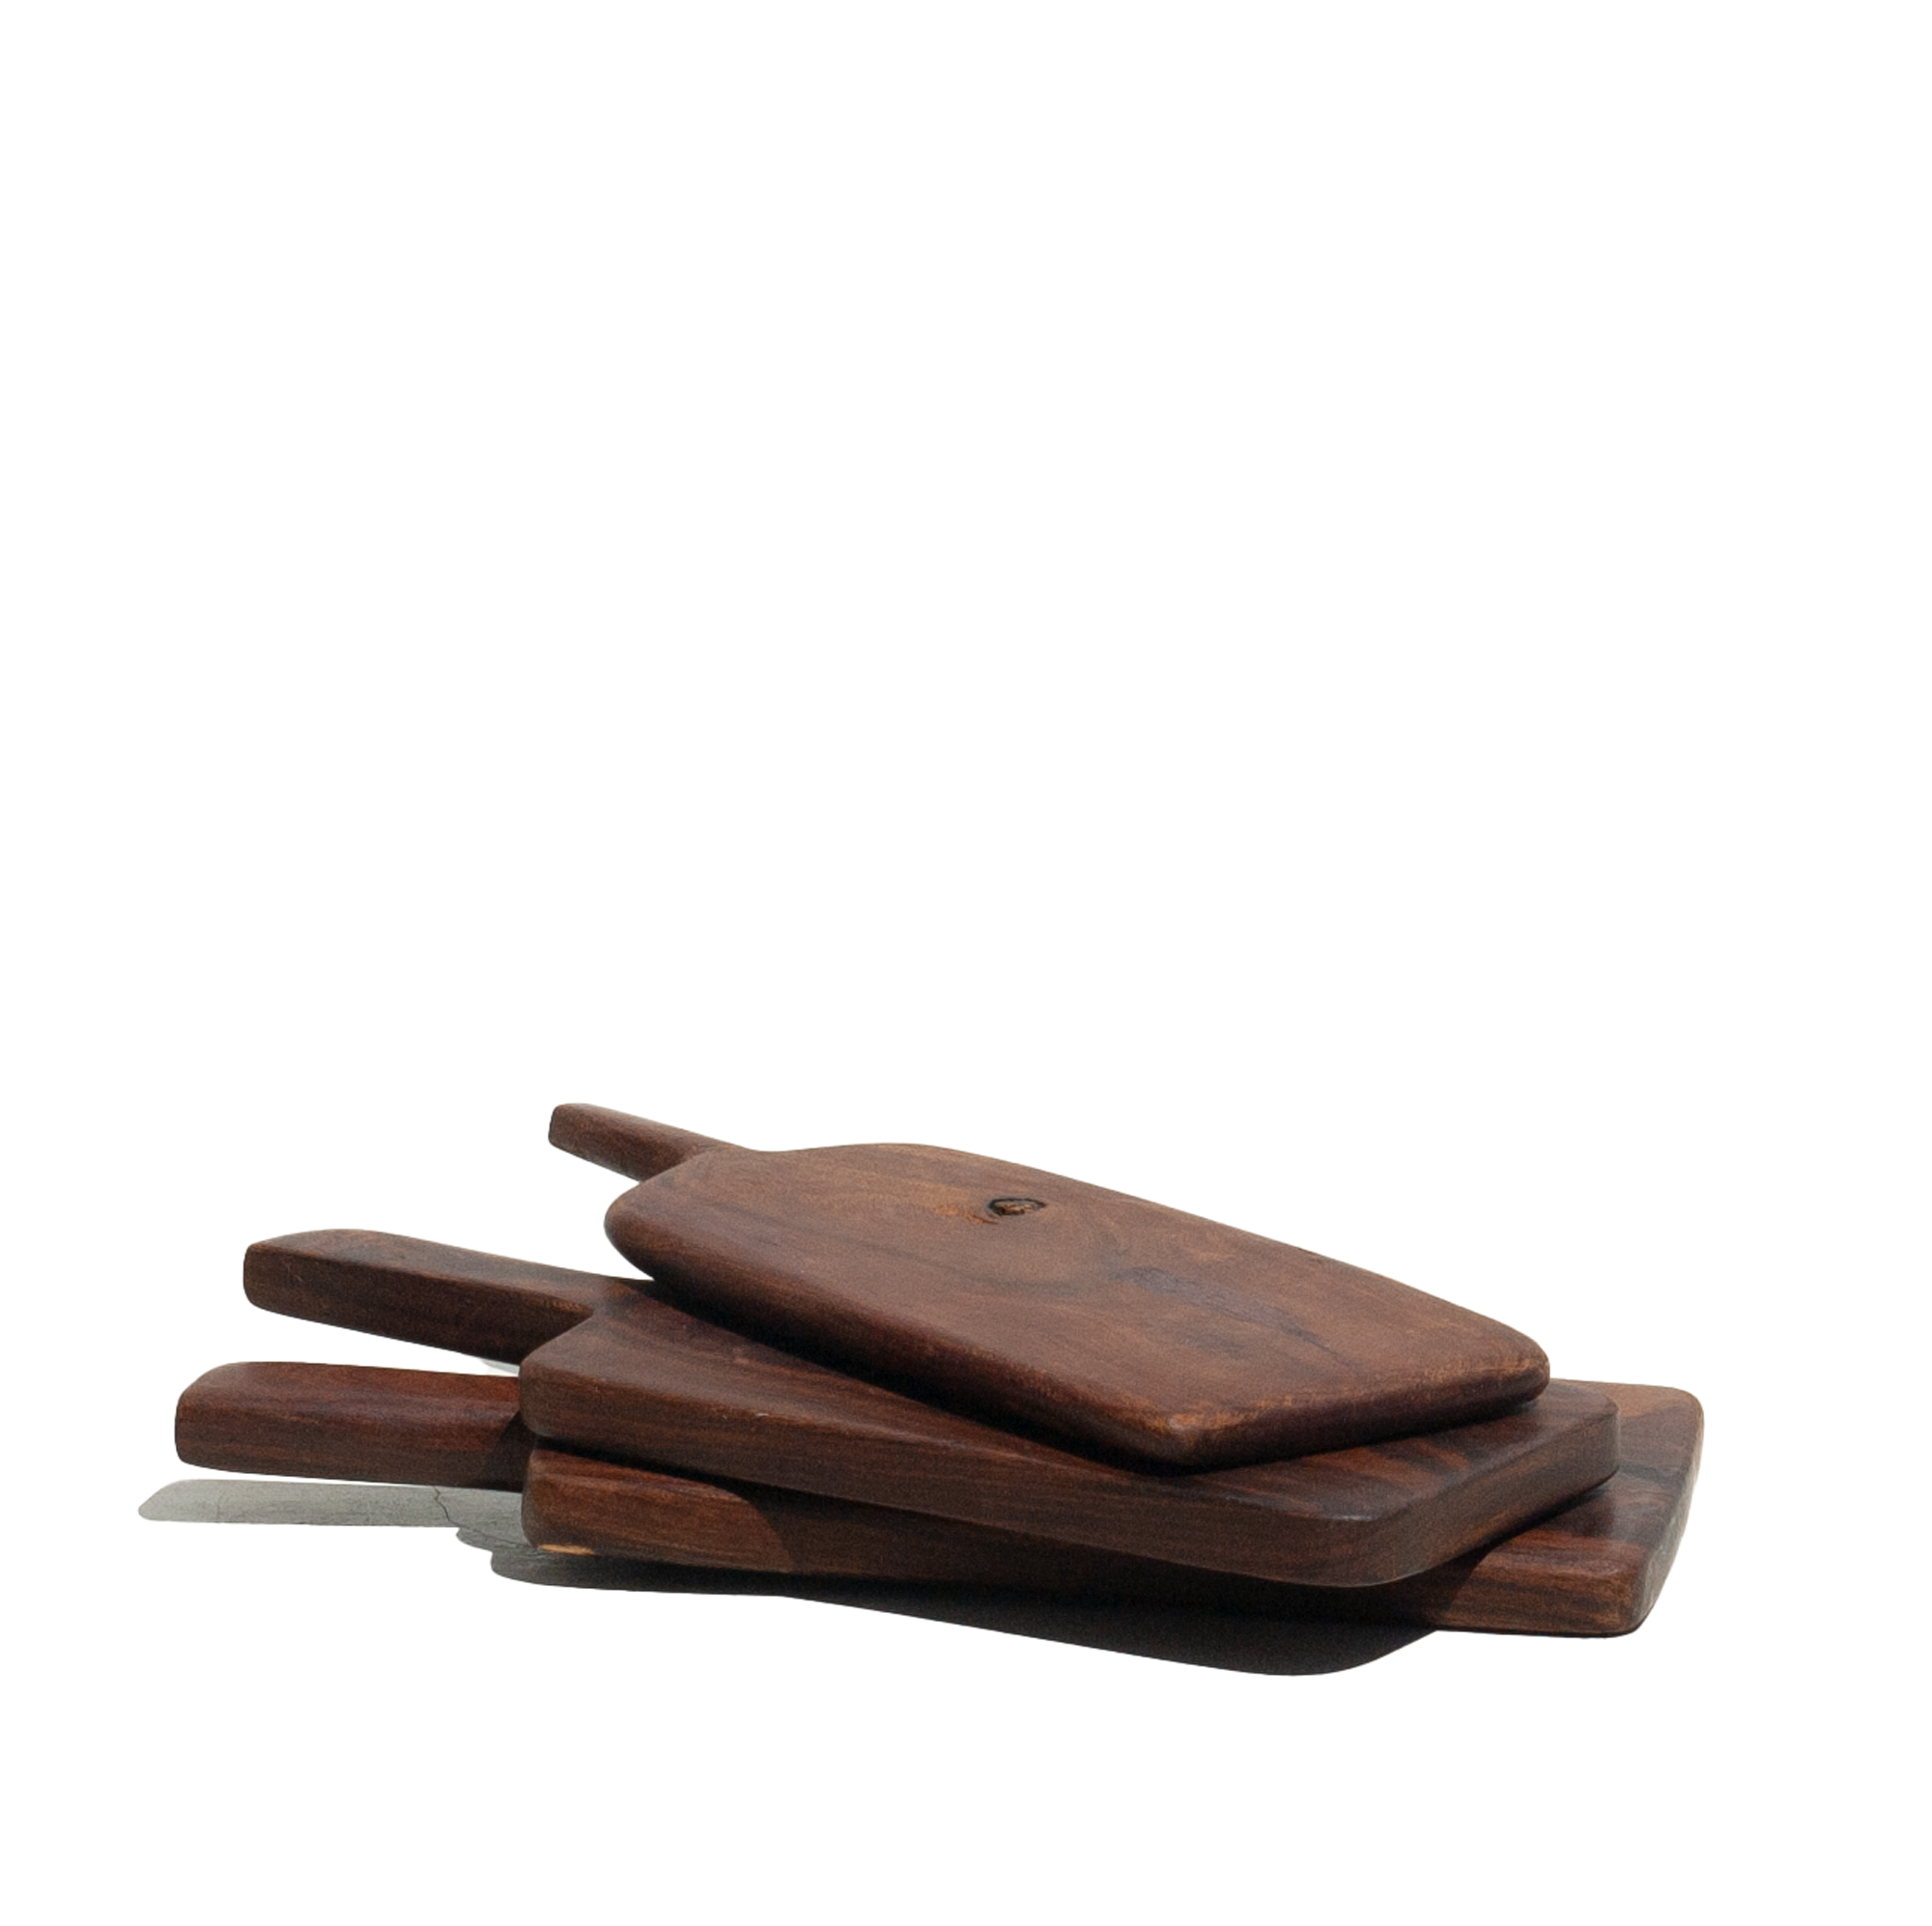 TABLA Ironwood cutting board